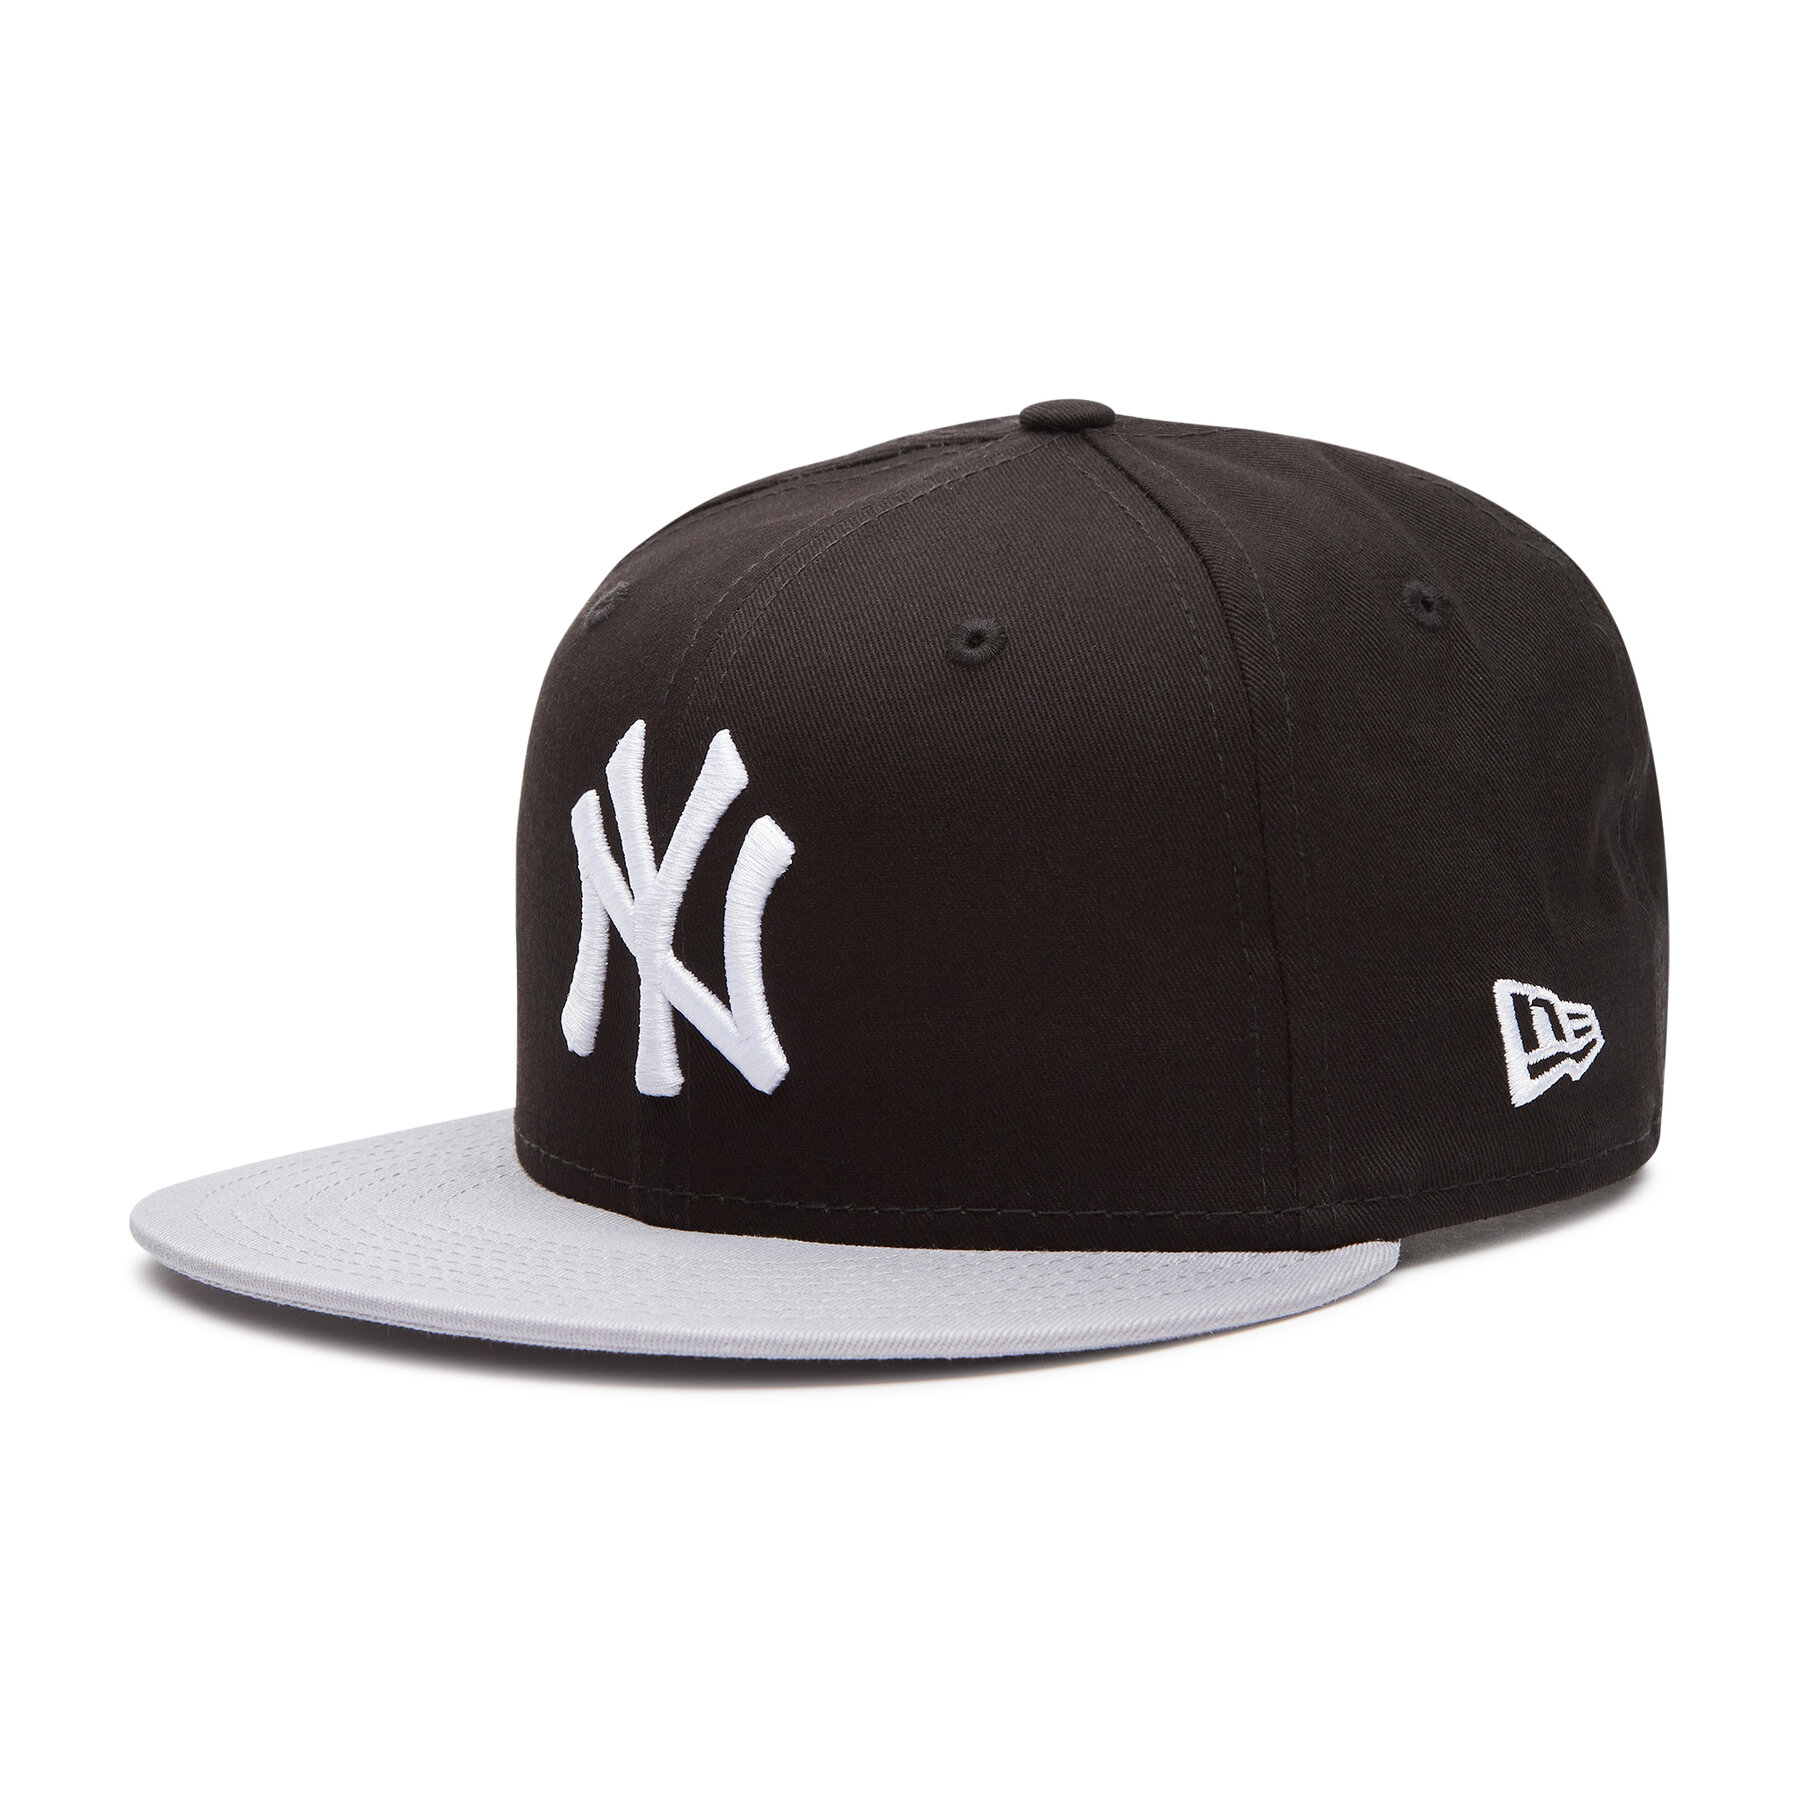 New Era 9fifty Snapback NY Yankees Cotton Block Kids Cap black (10880043) - Gorros niños